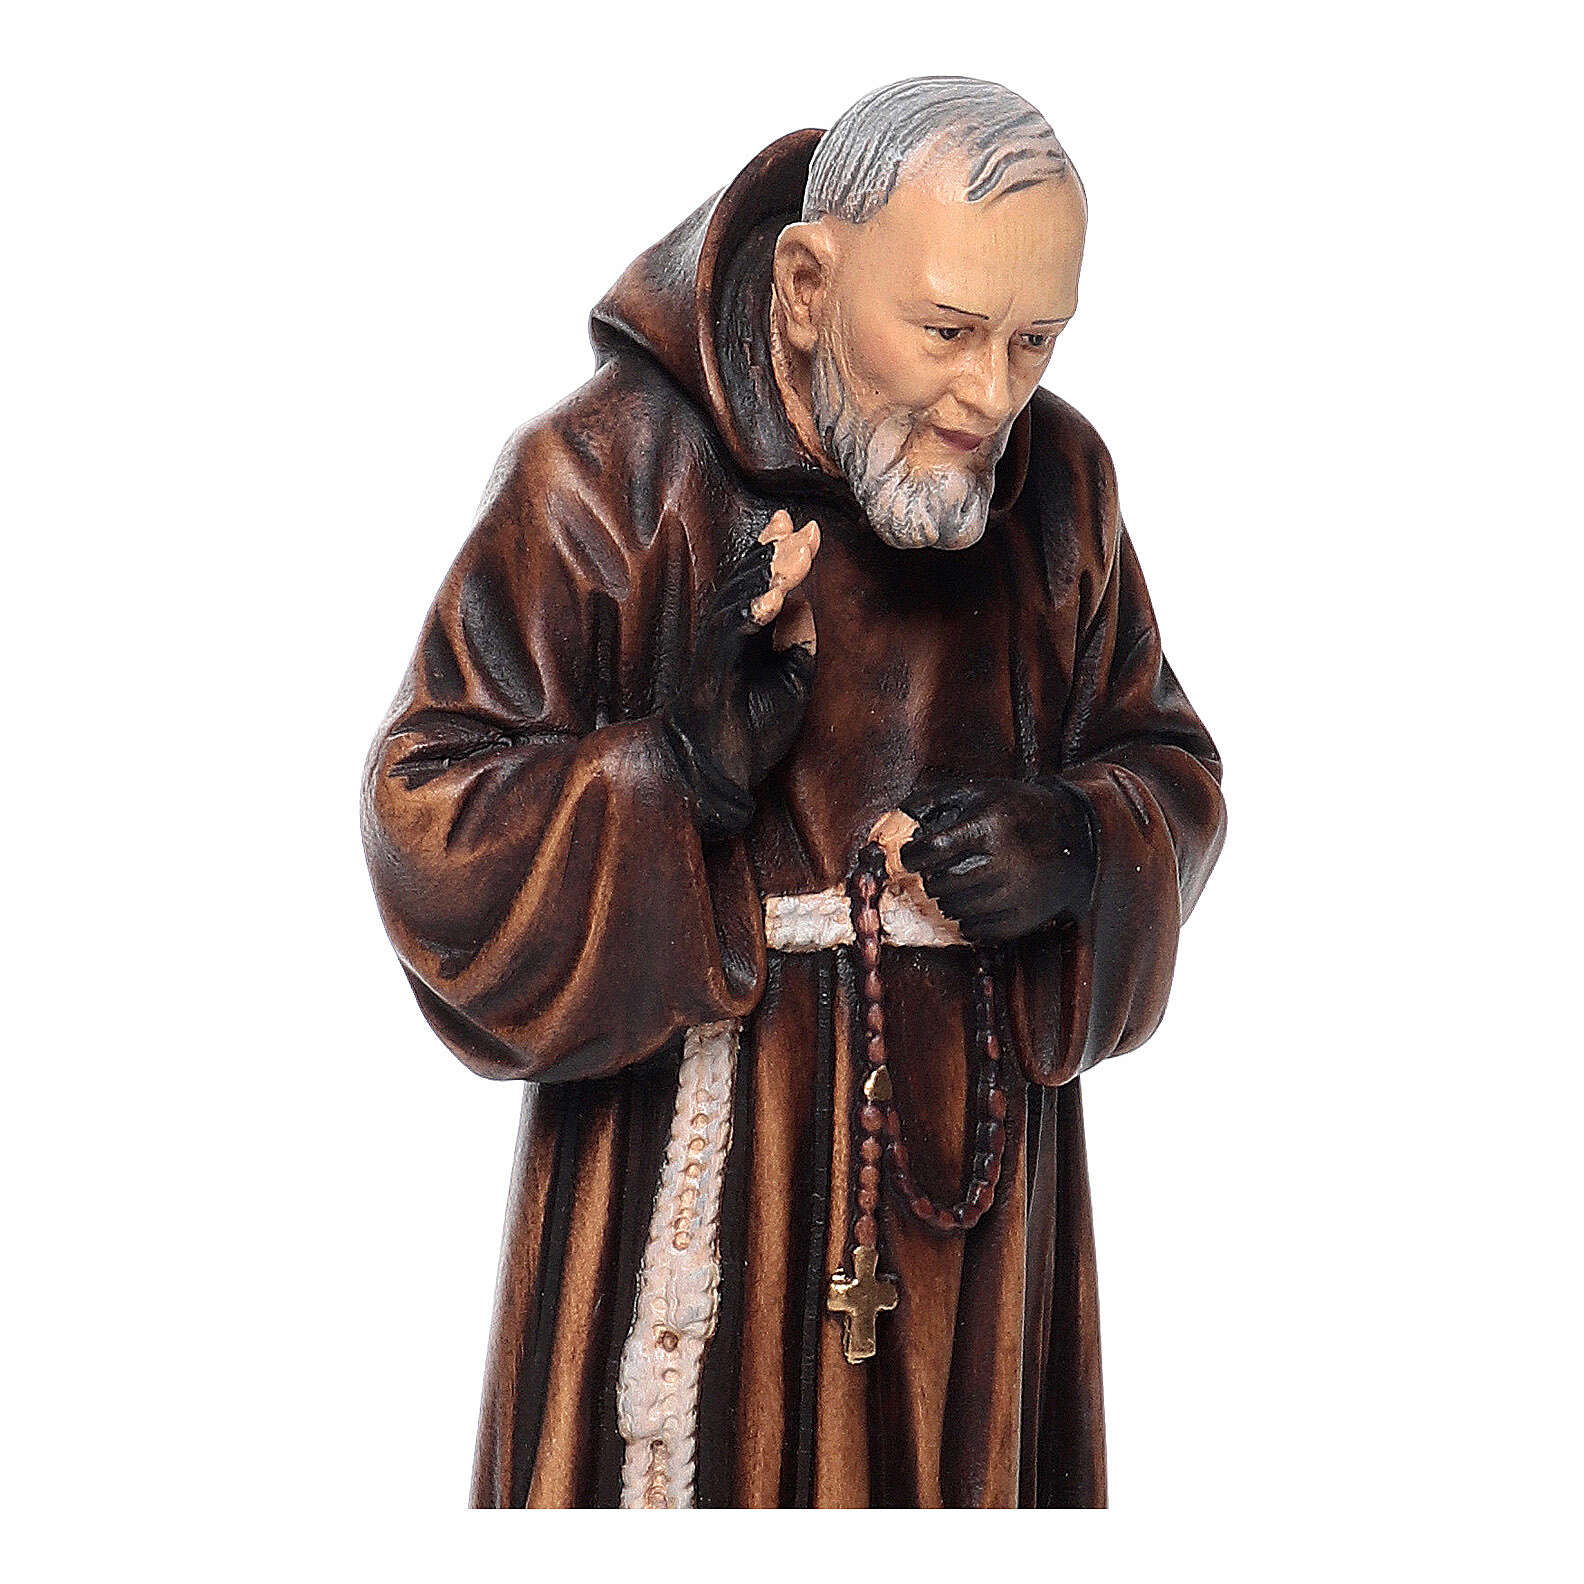 Statua legno San Padre Pio da Pietrelcina dipinta